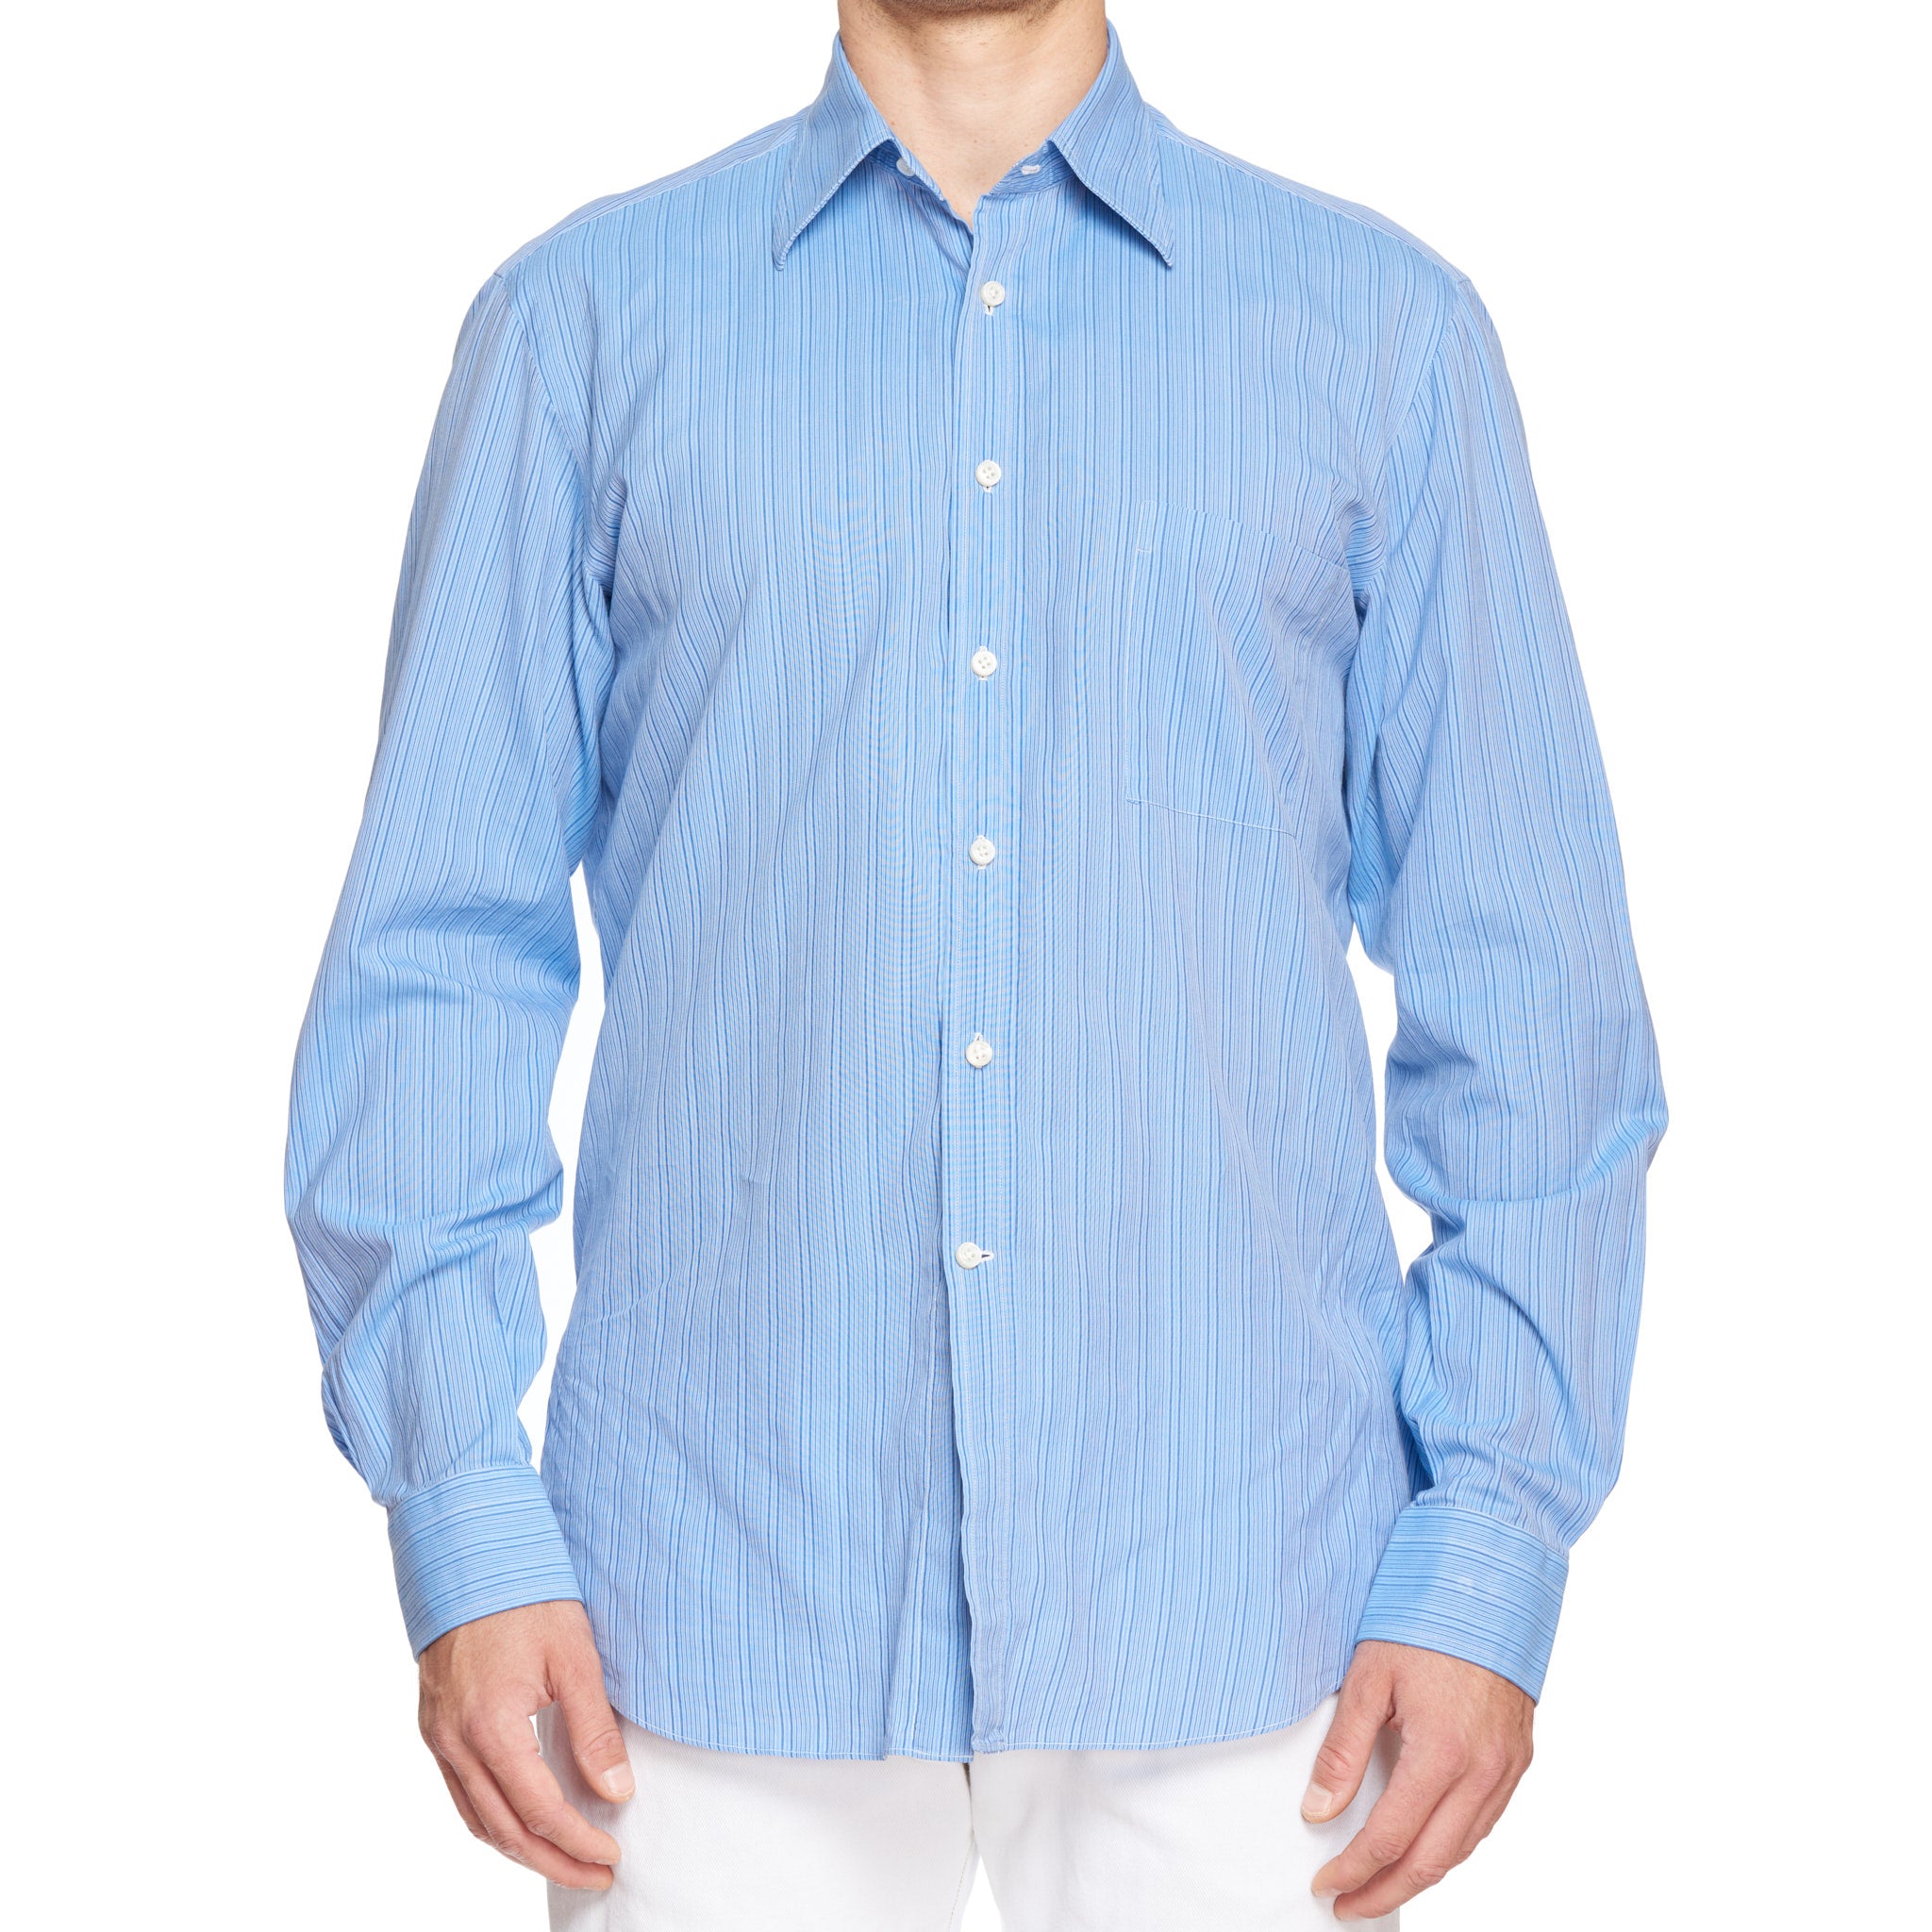 MARIANO RUBINACCI Handmade Blue Striped Cotton Dress Shirt EU 43 US 17 RUBINACCI